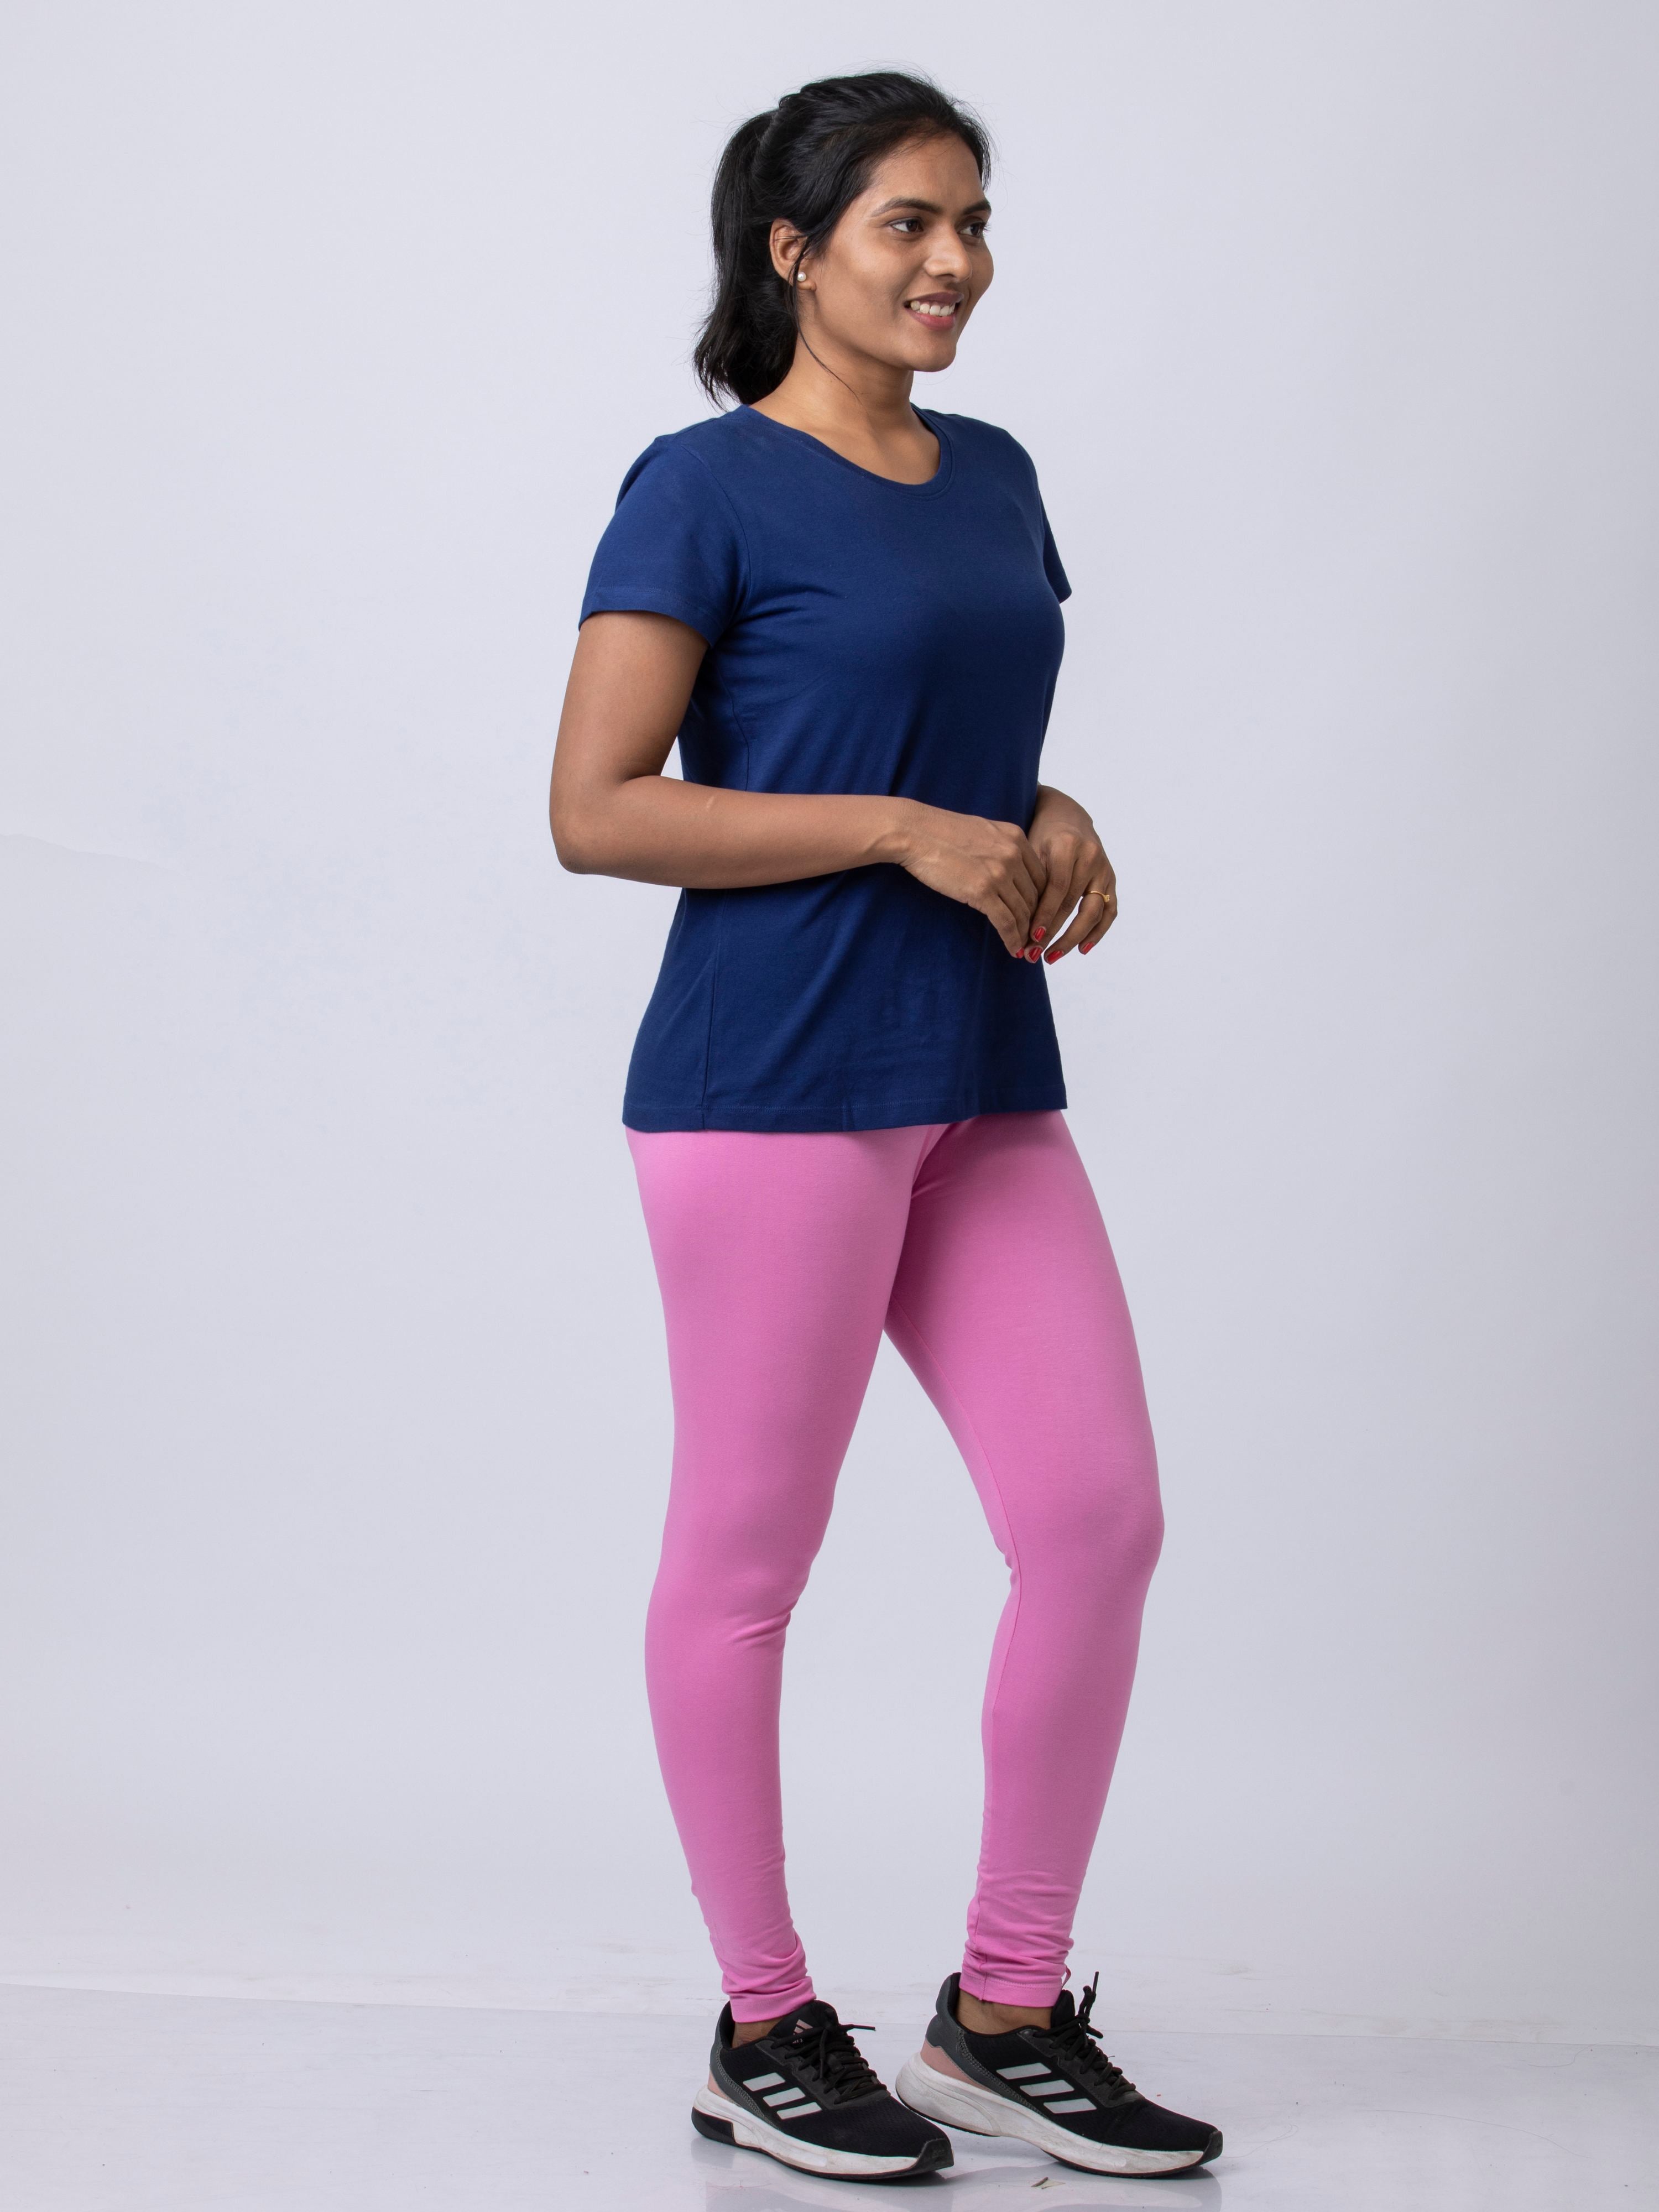 Yoga Pants Women Leggings Bra Set For Fitness High Waist Long Pants Gym  Clothing | eBay